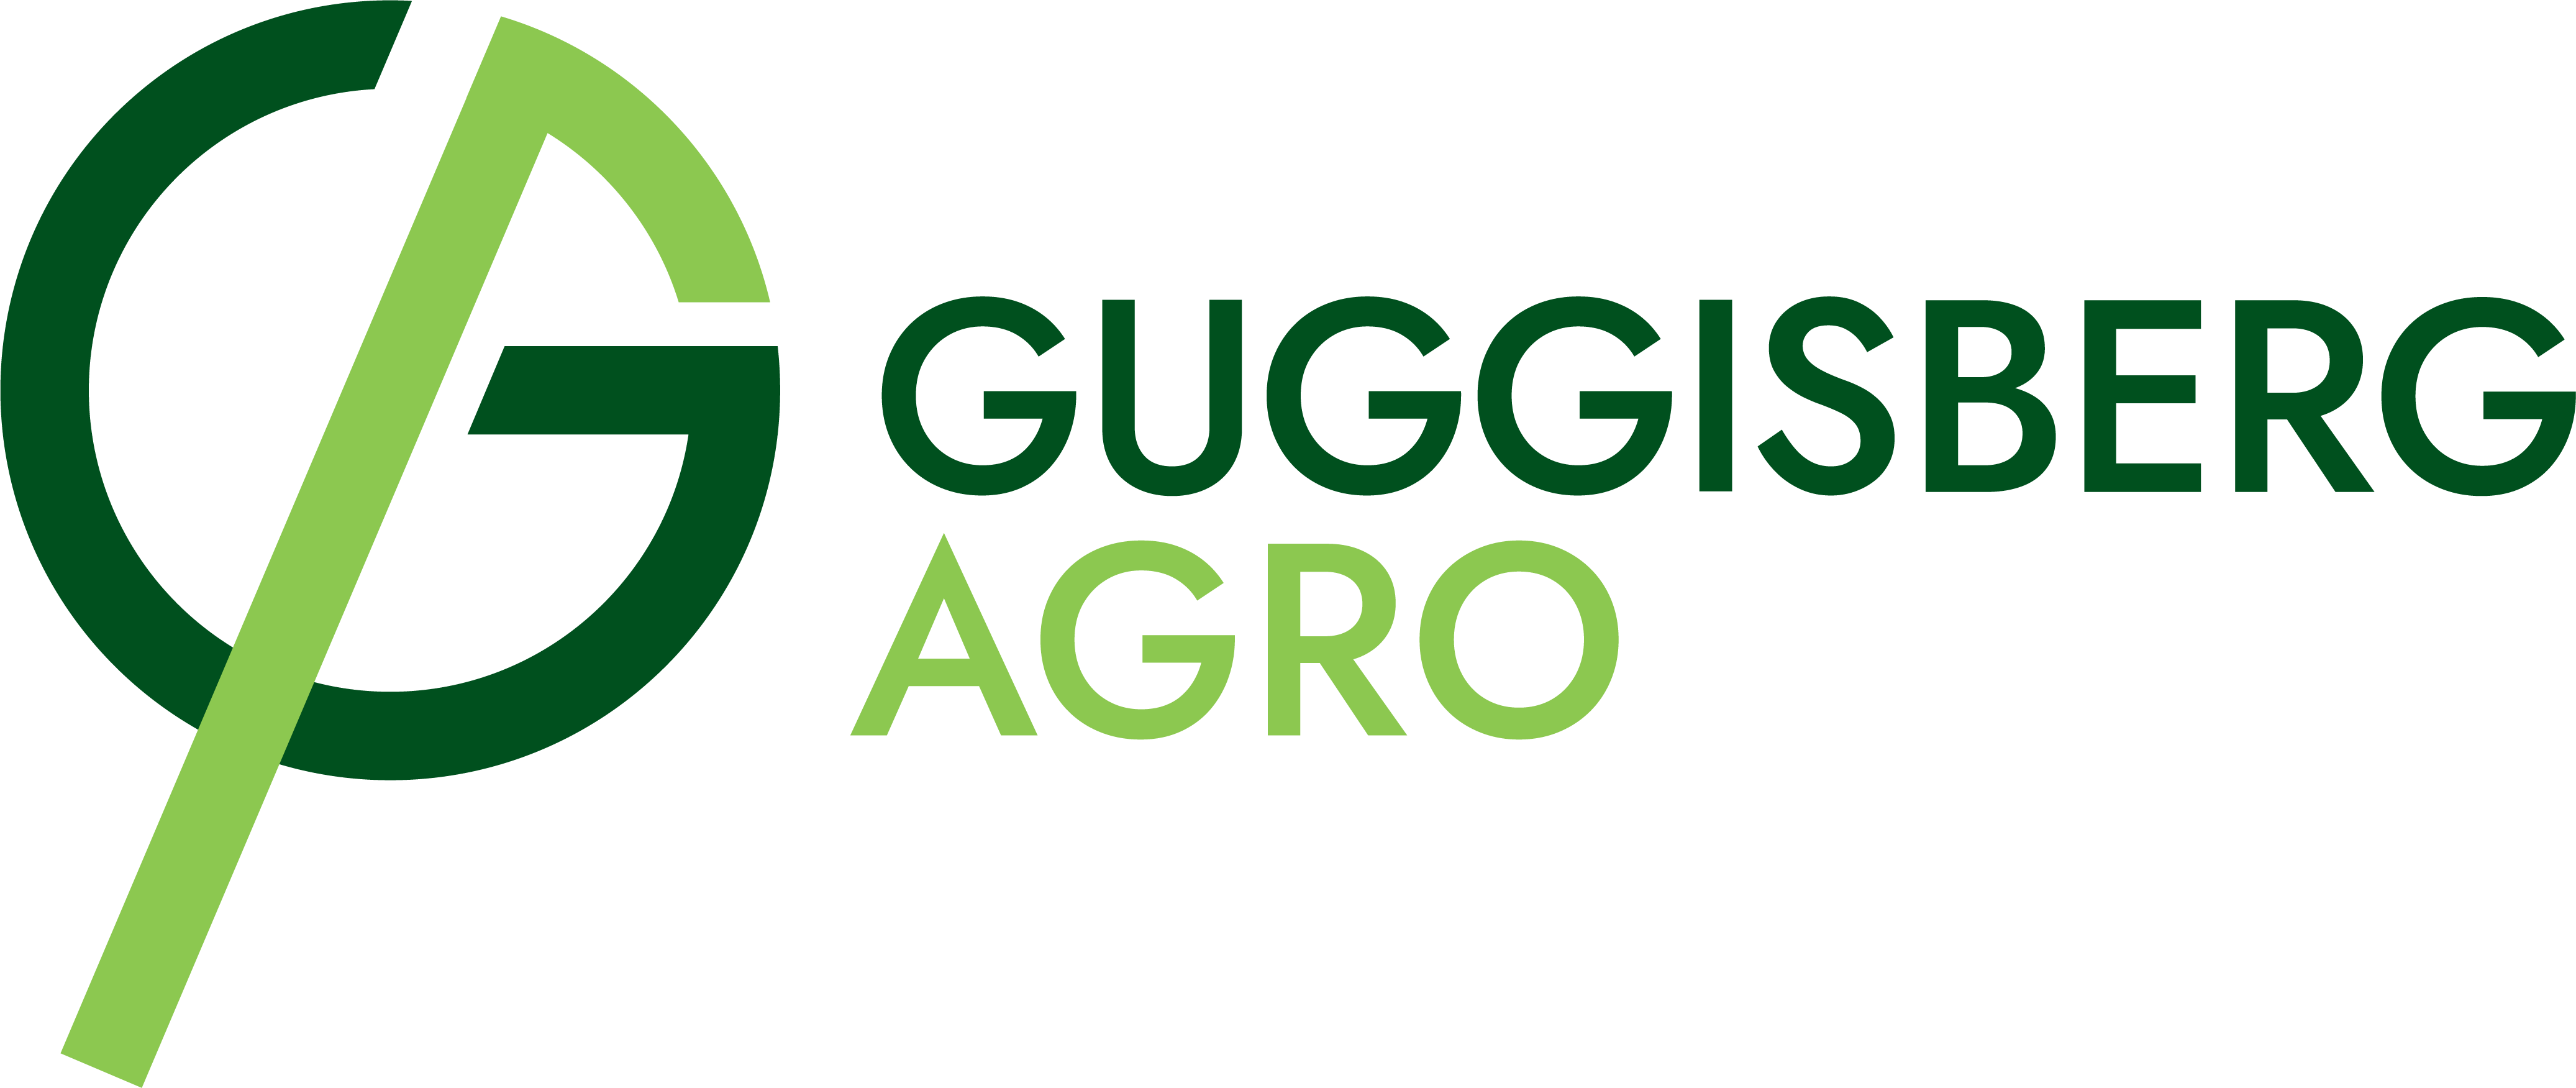 Guggisberg-Agro